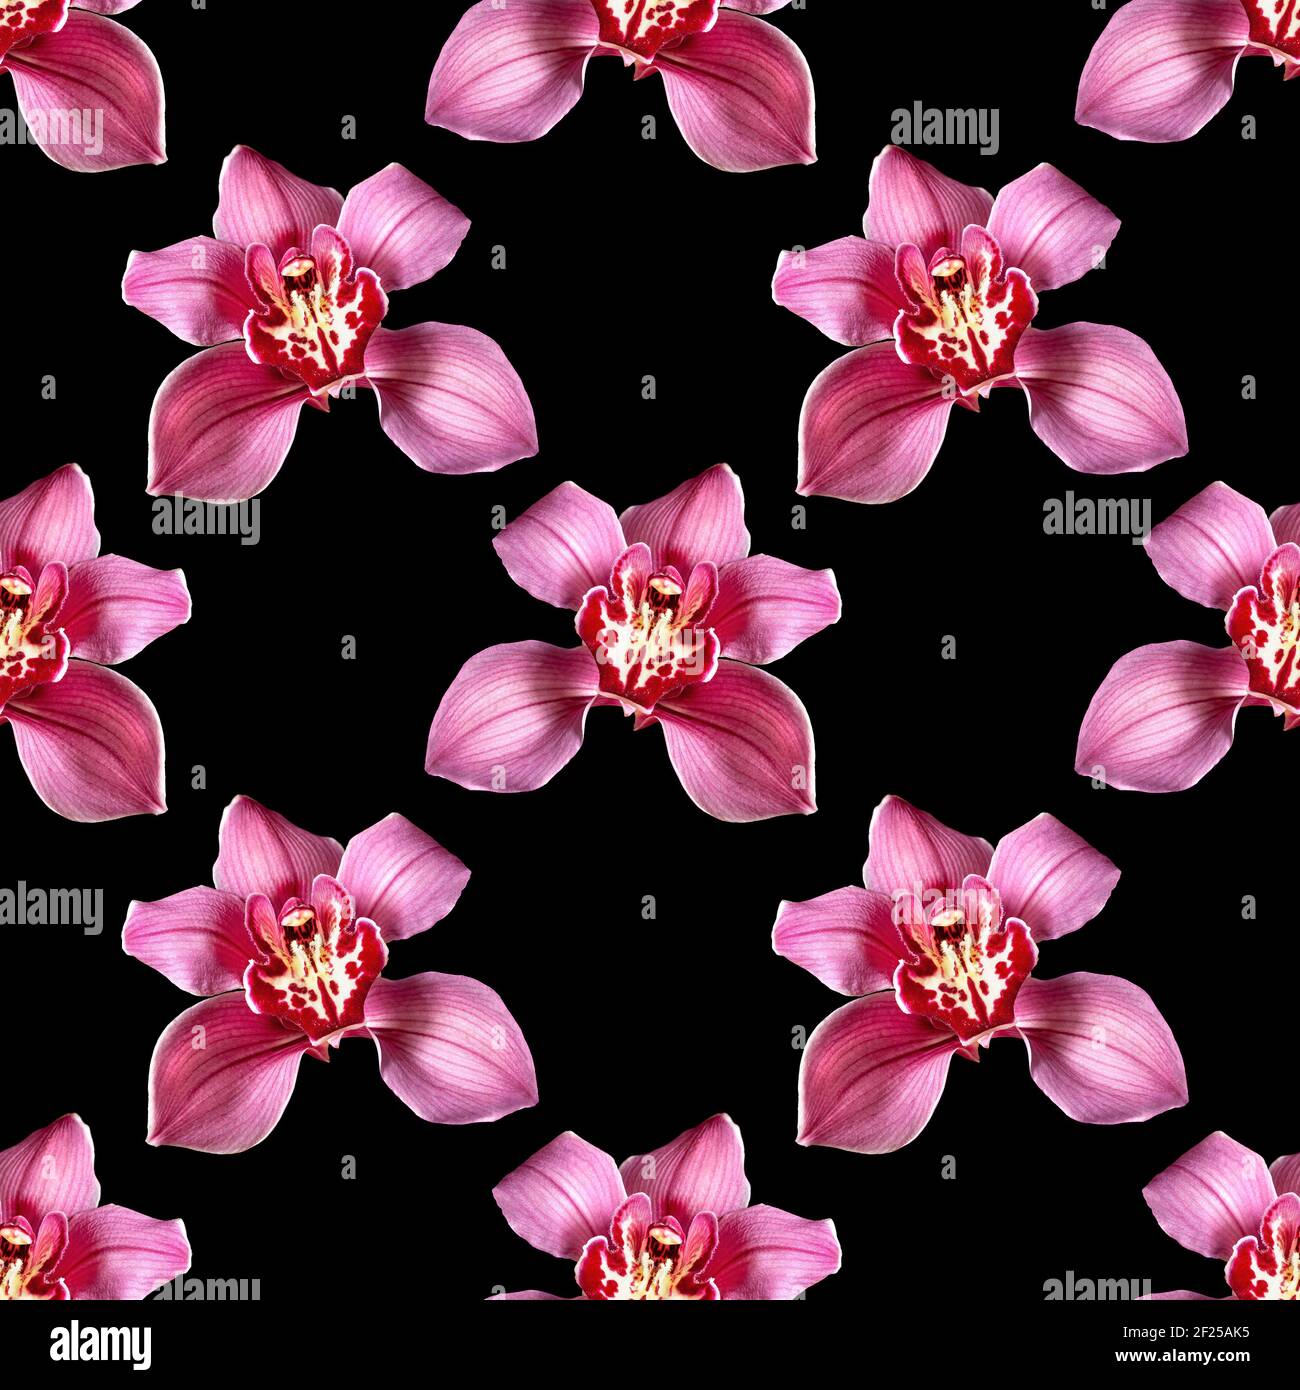 Seamless image with cymbidium orchid isolated on black background Stock Photo